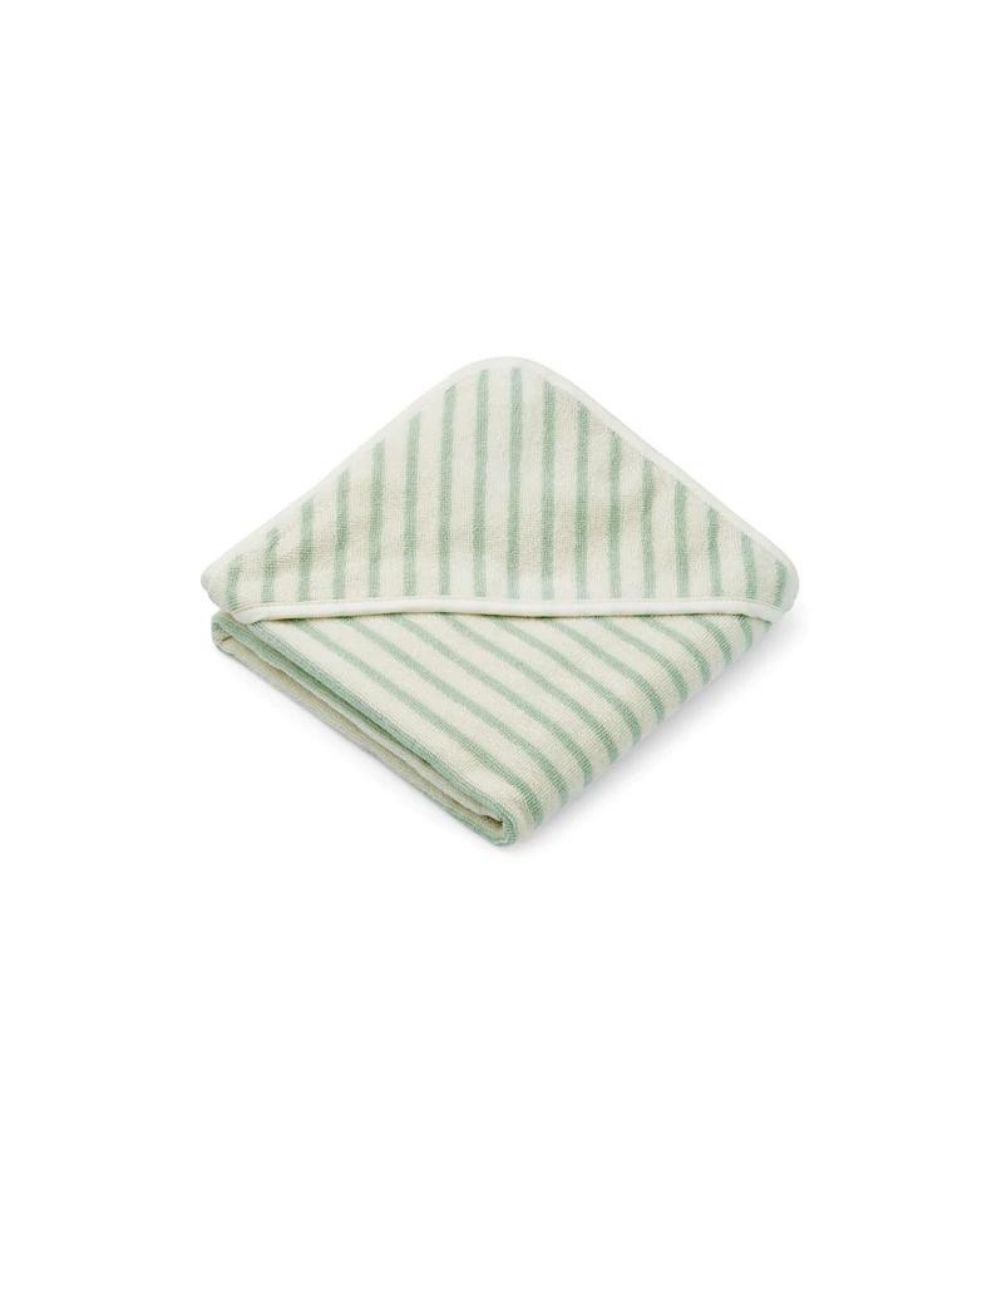 Alba Hooded Baby Towel - Dusty Mint/Cream